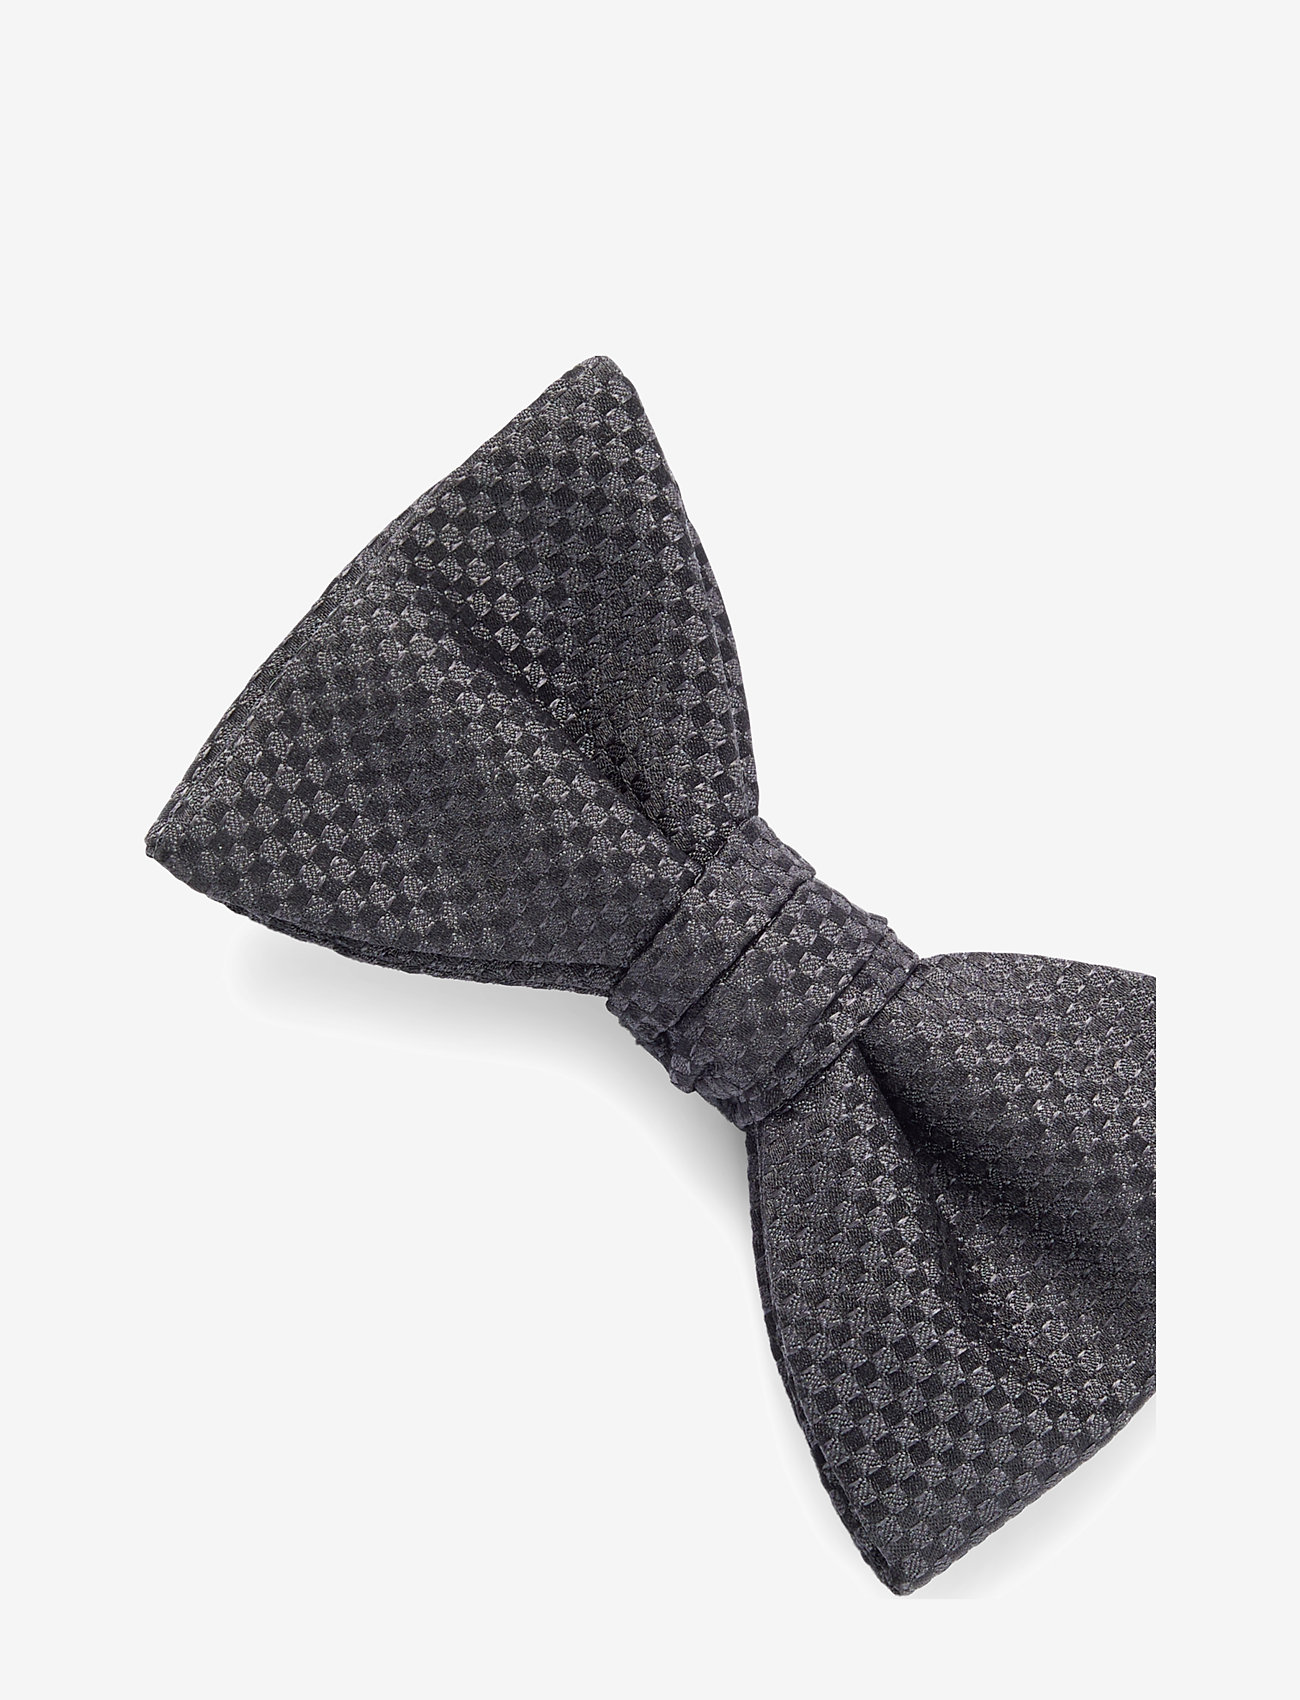 HUGO - Bow tie dressy - die niedrigsten preise - black - 1